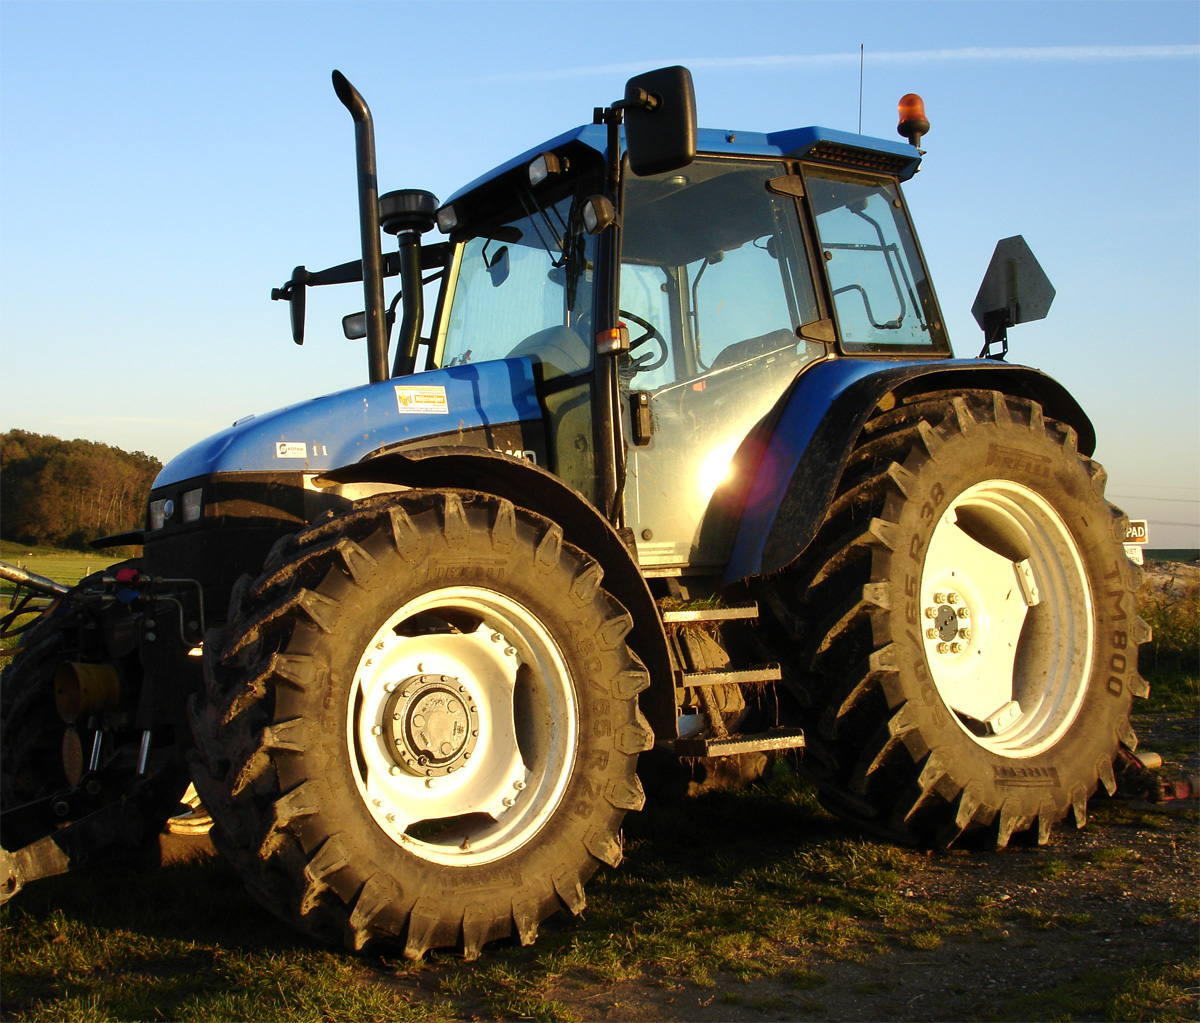 File:Modern-tractor.jpg - Wikimedia Commons